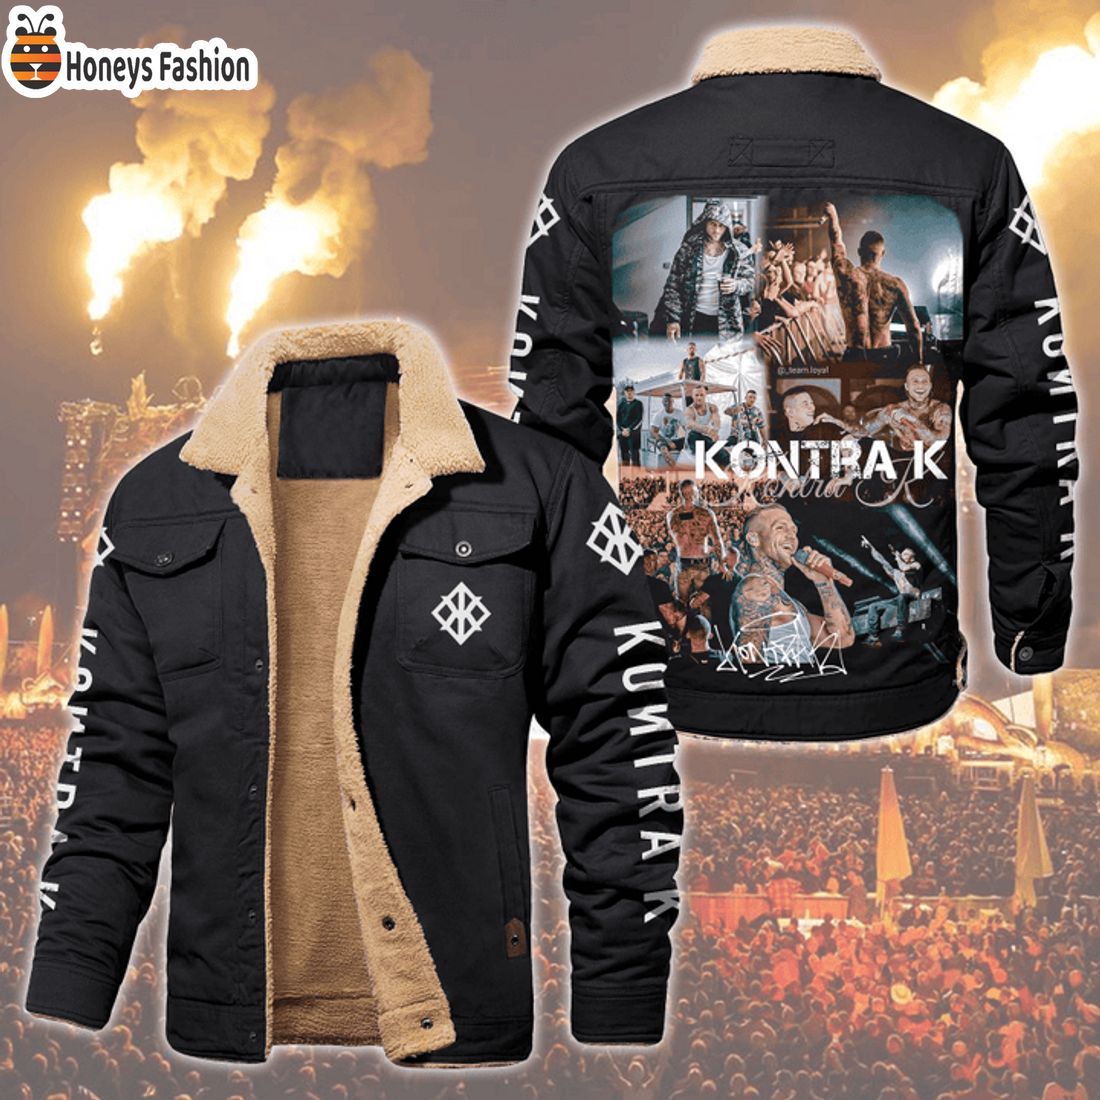 HOT Kontra K Memorable Moment Arena Tour Fleece Leather Jacket